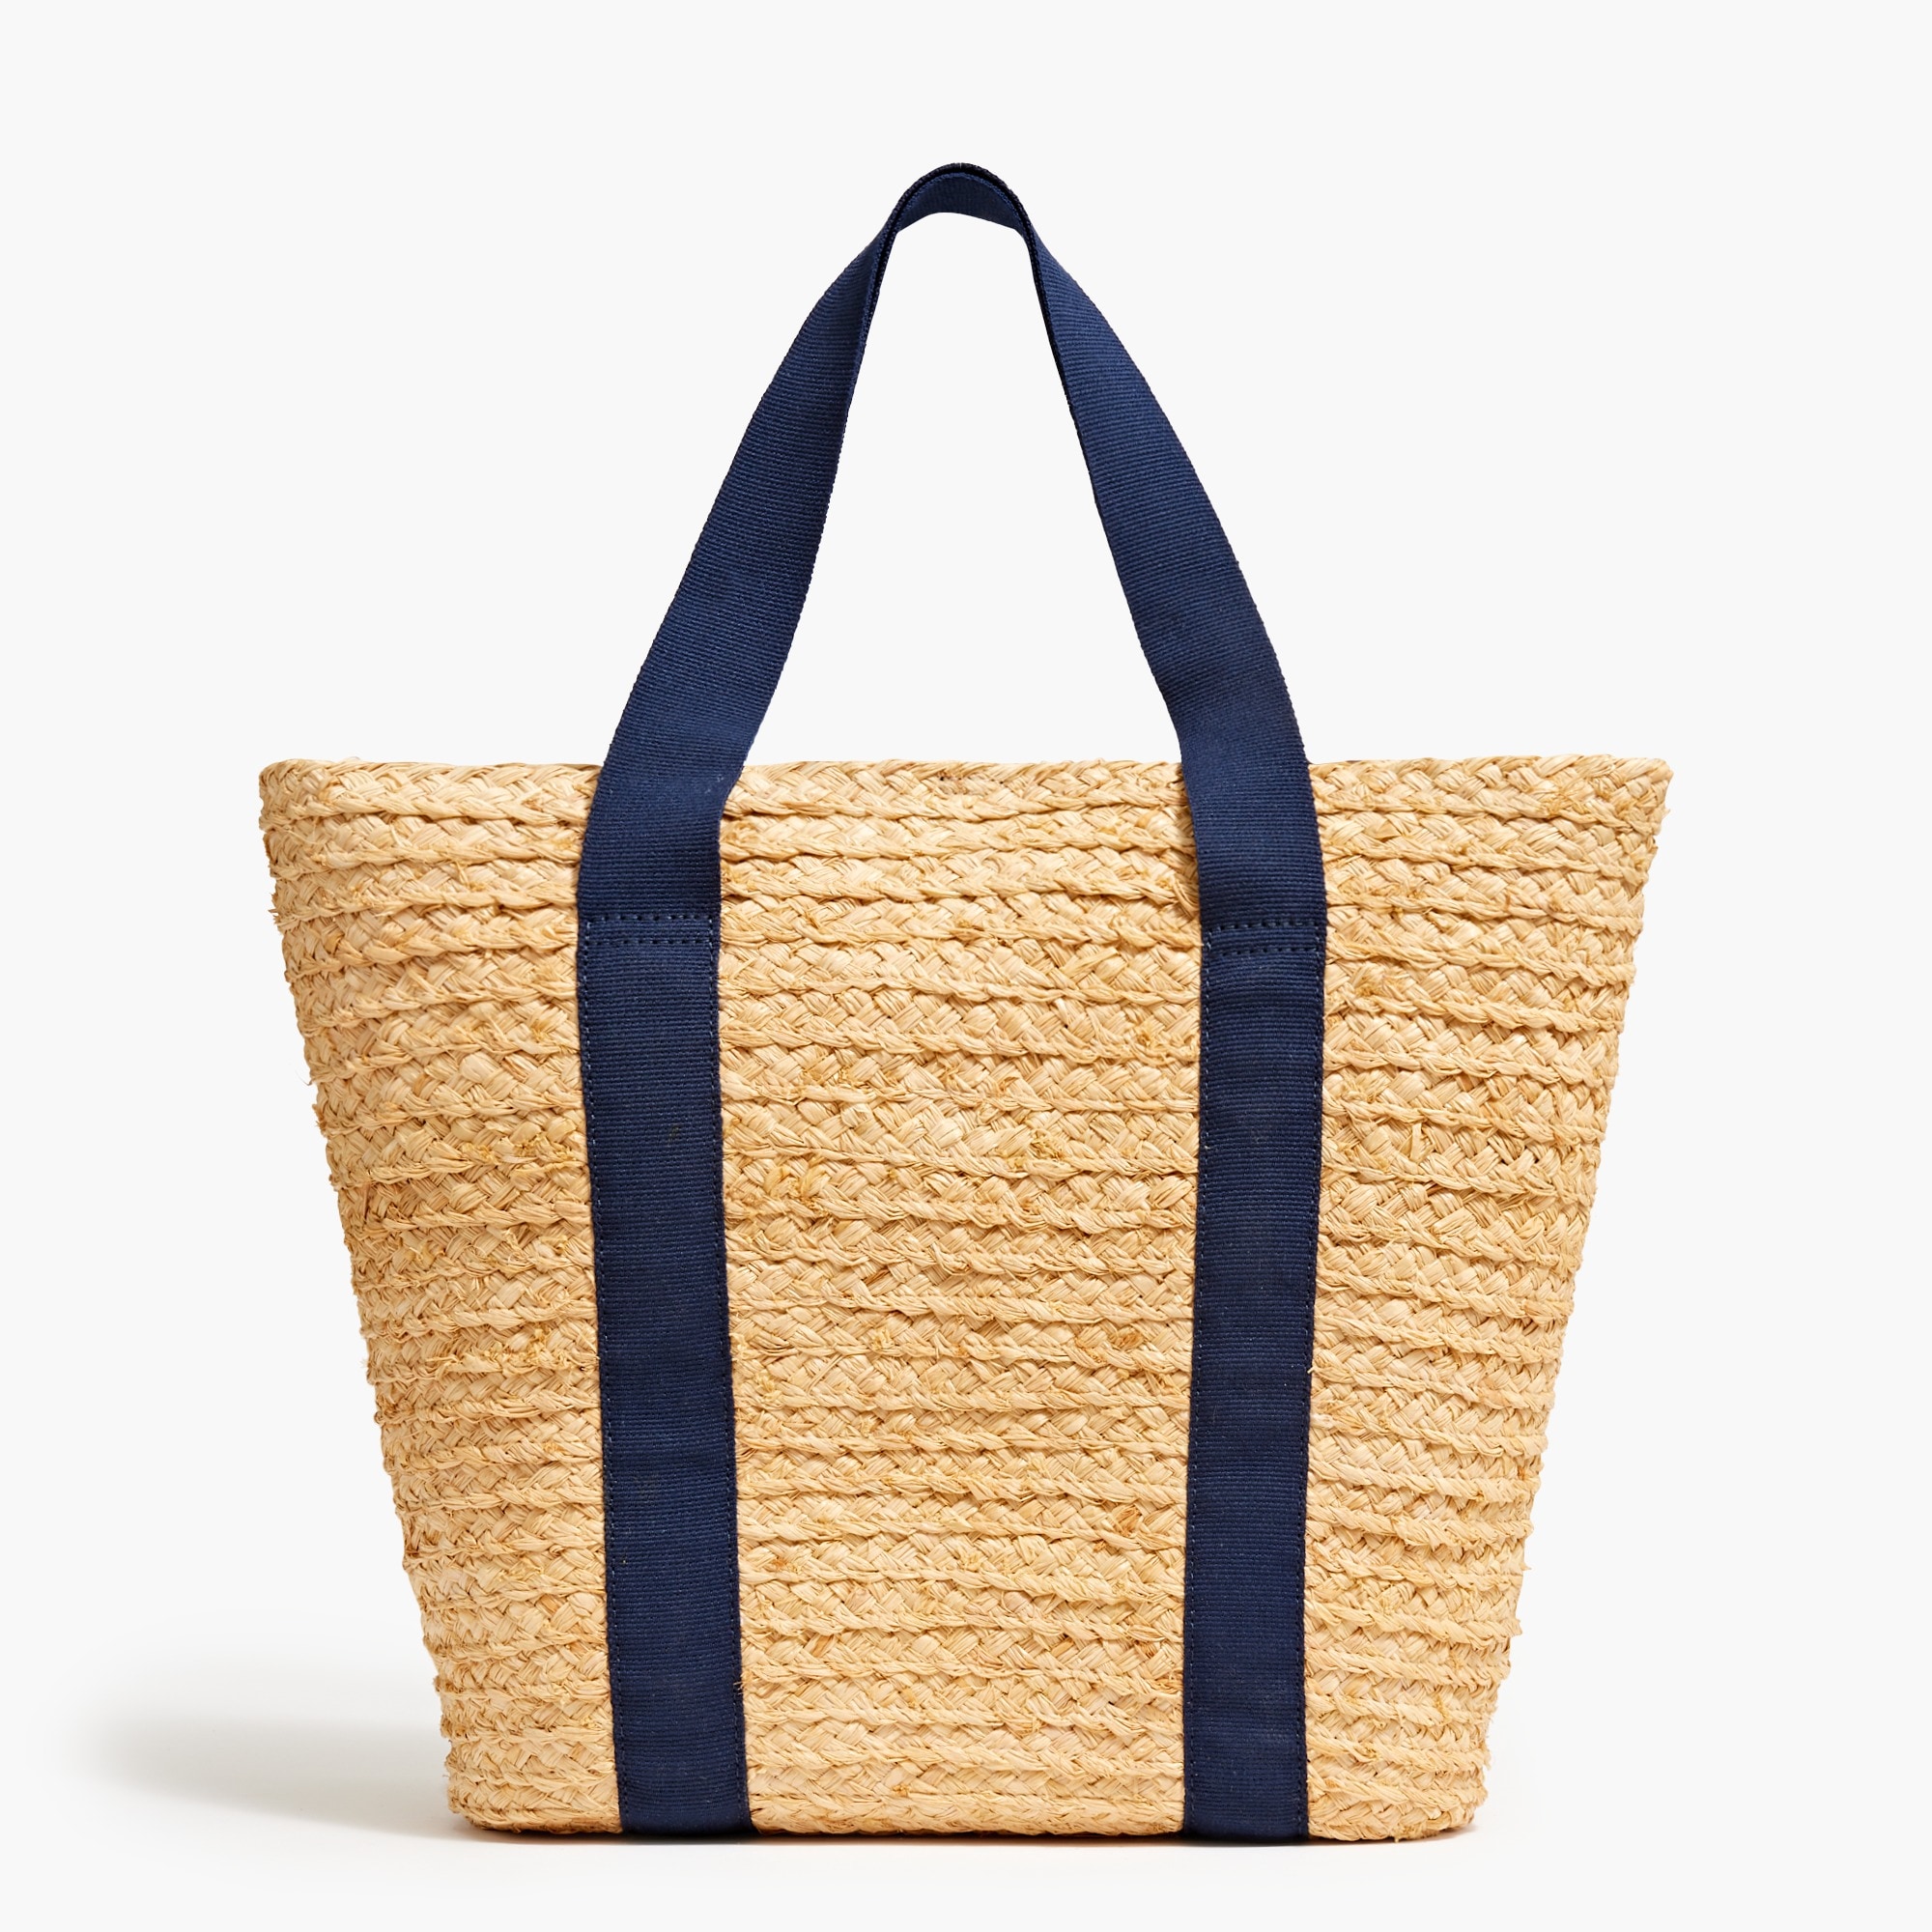  Raffia straw structured tote bag